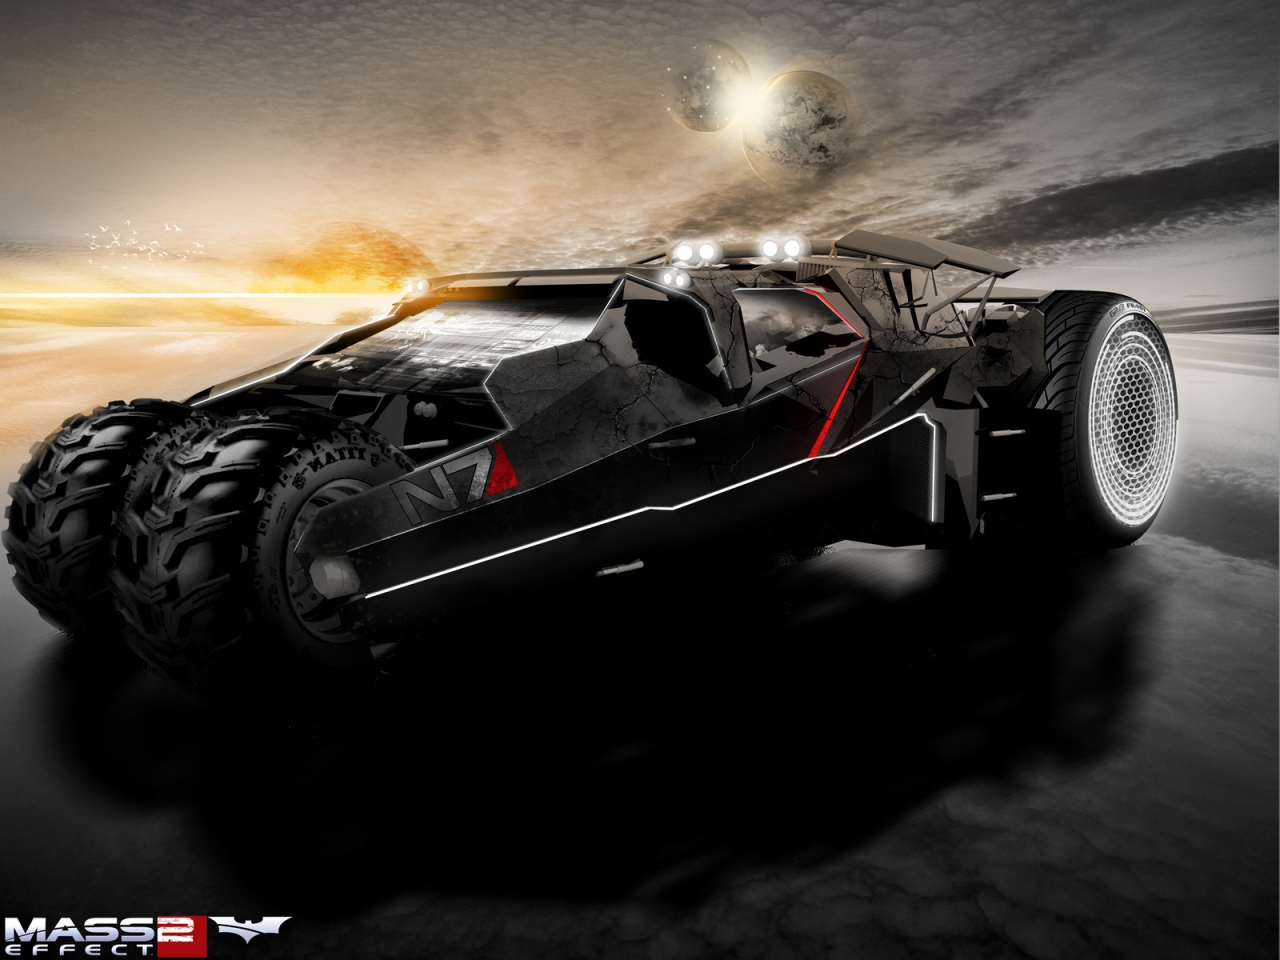 Mass Effect 2 Car for 1280 x 960 resolution